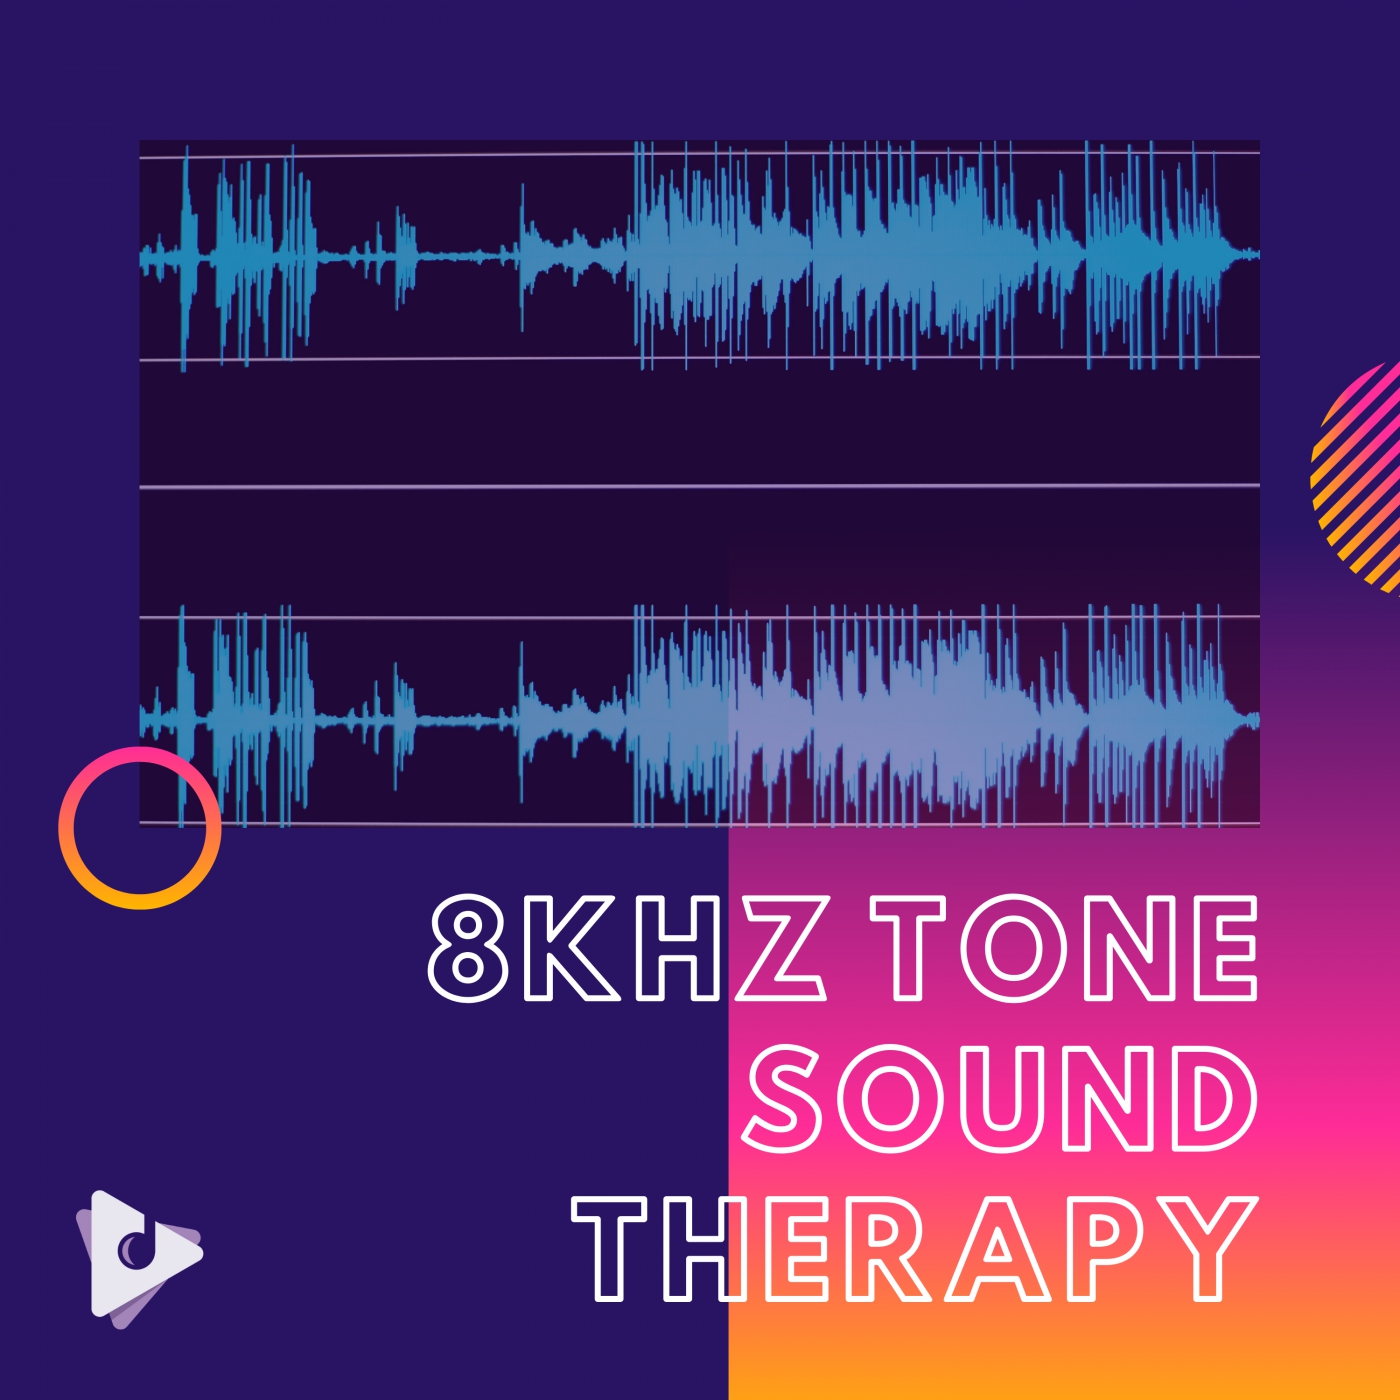 Sound tone. Звуковая терапия. Tinnitus Sound Therapy. Sound Therapy.